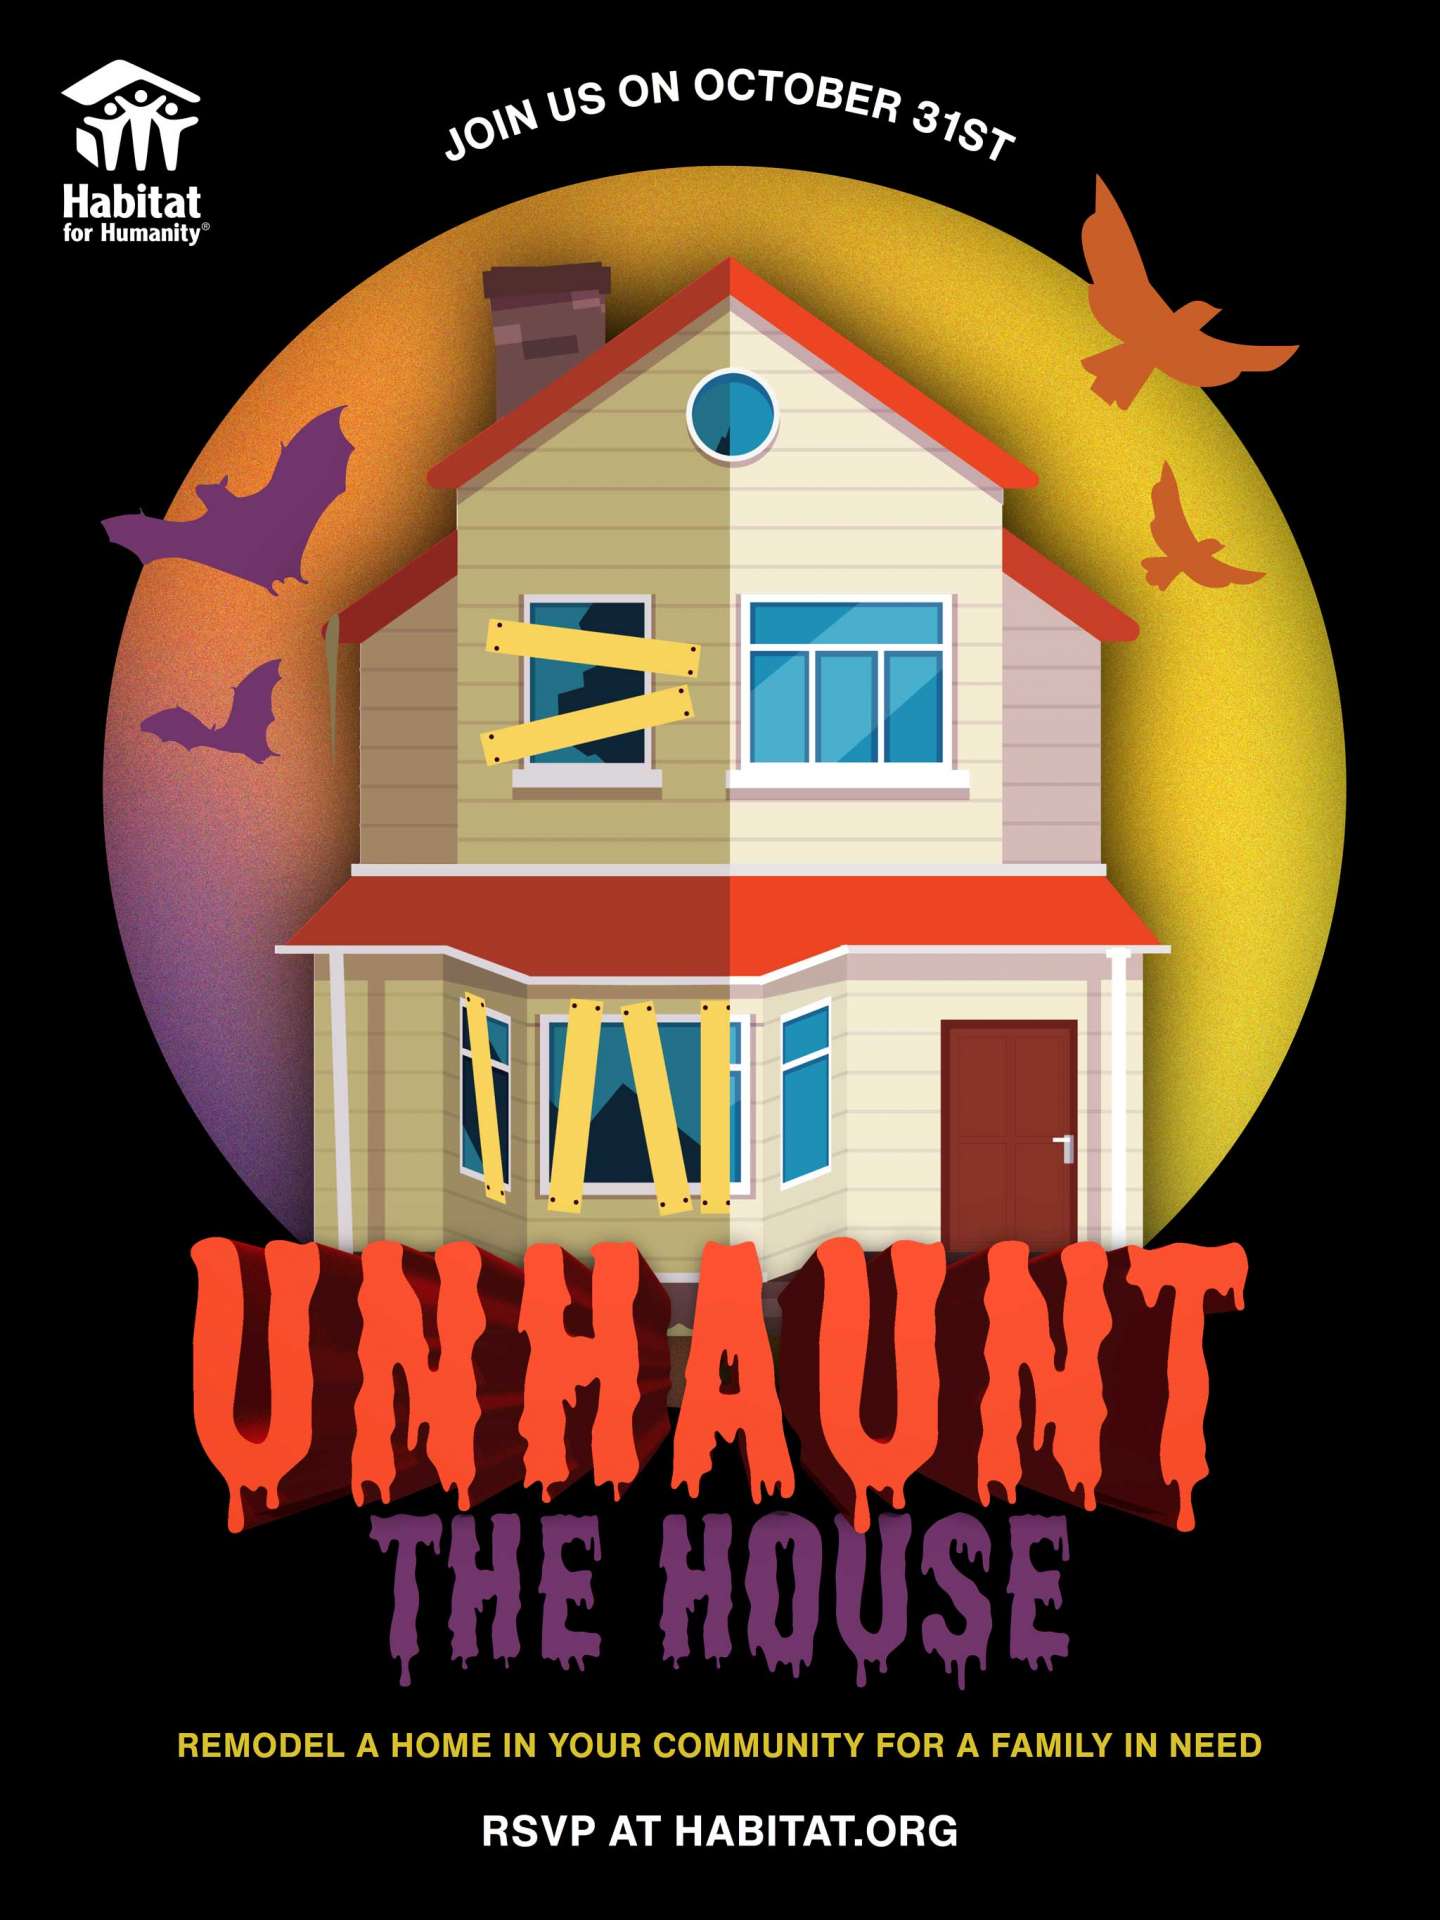 Unhaunt the House